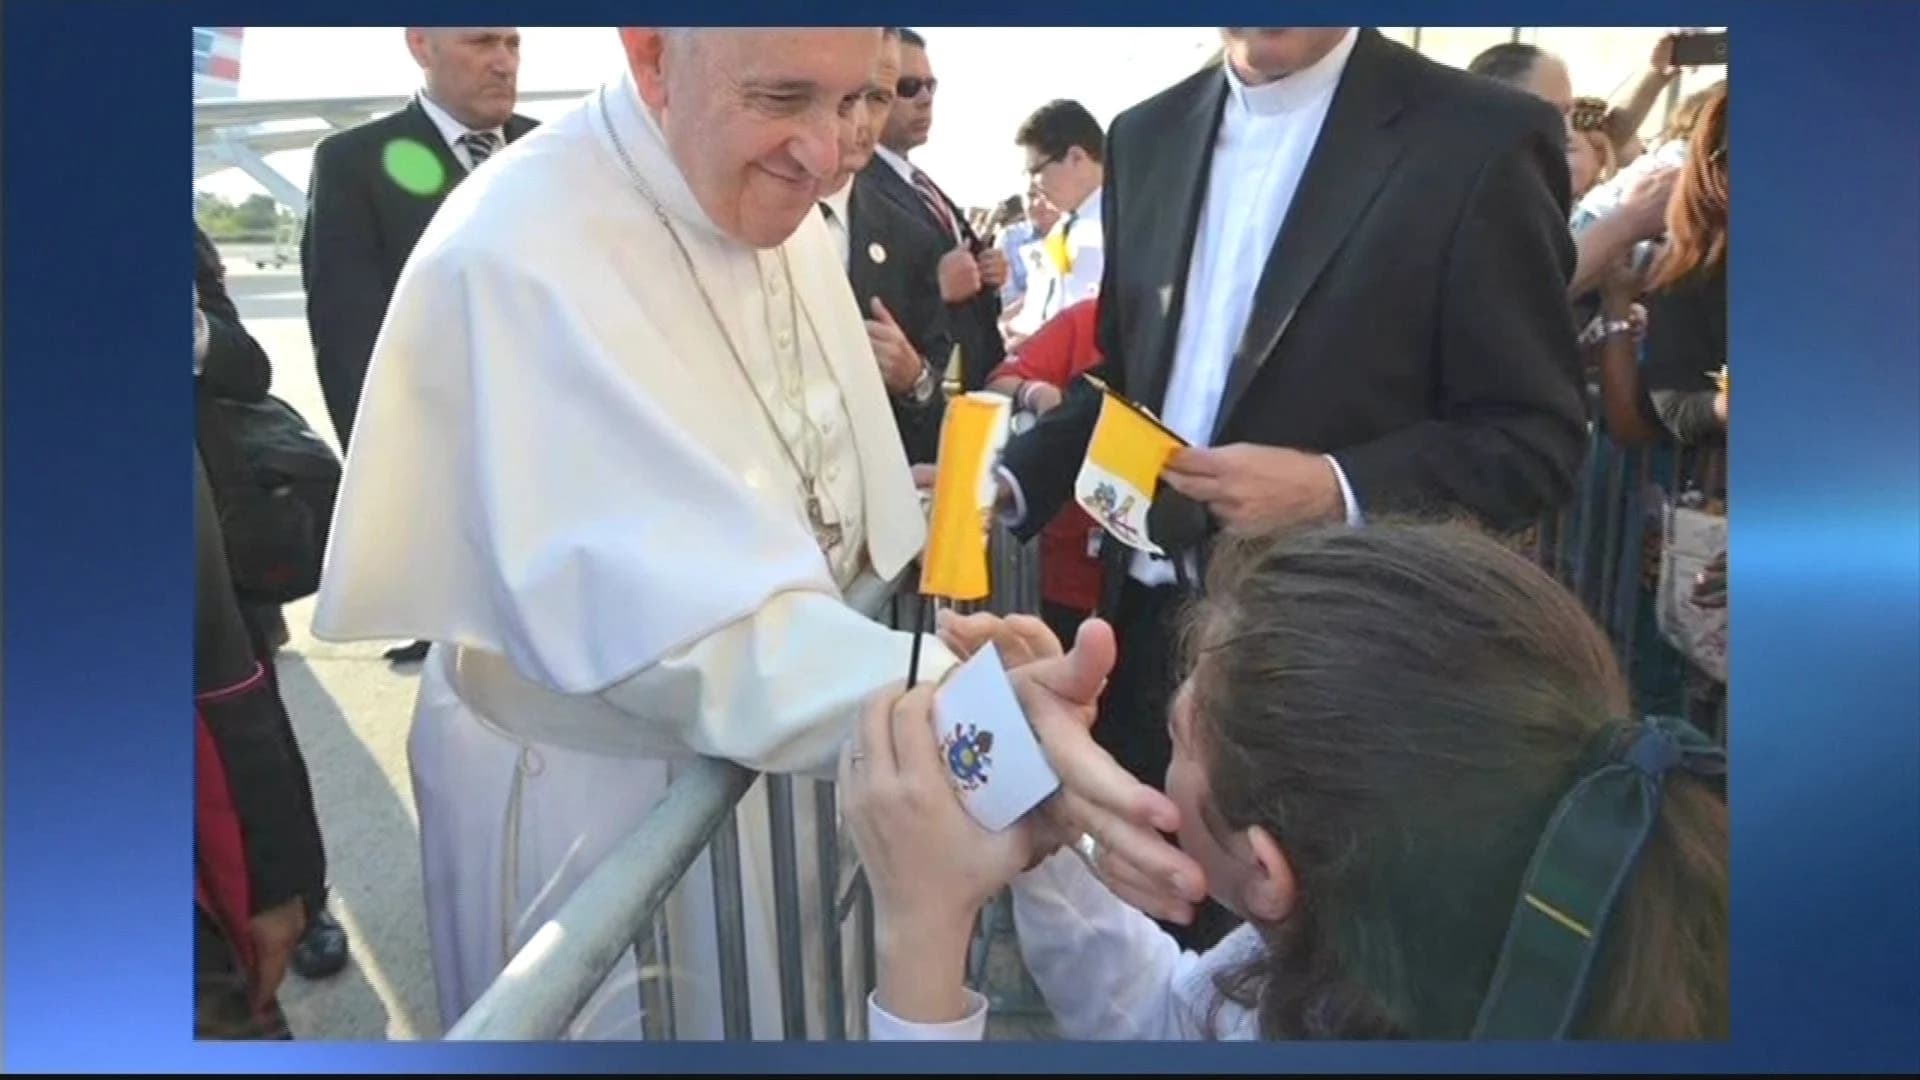 Paralyzed girl says pope meeting began healing process